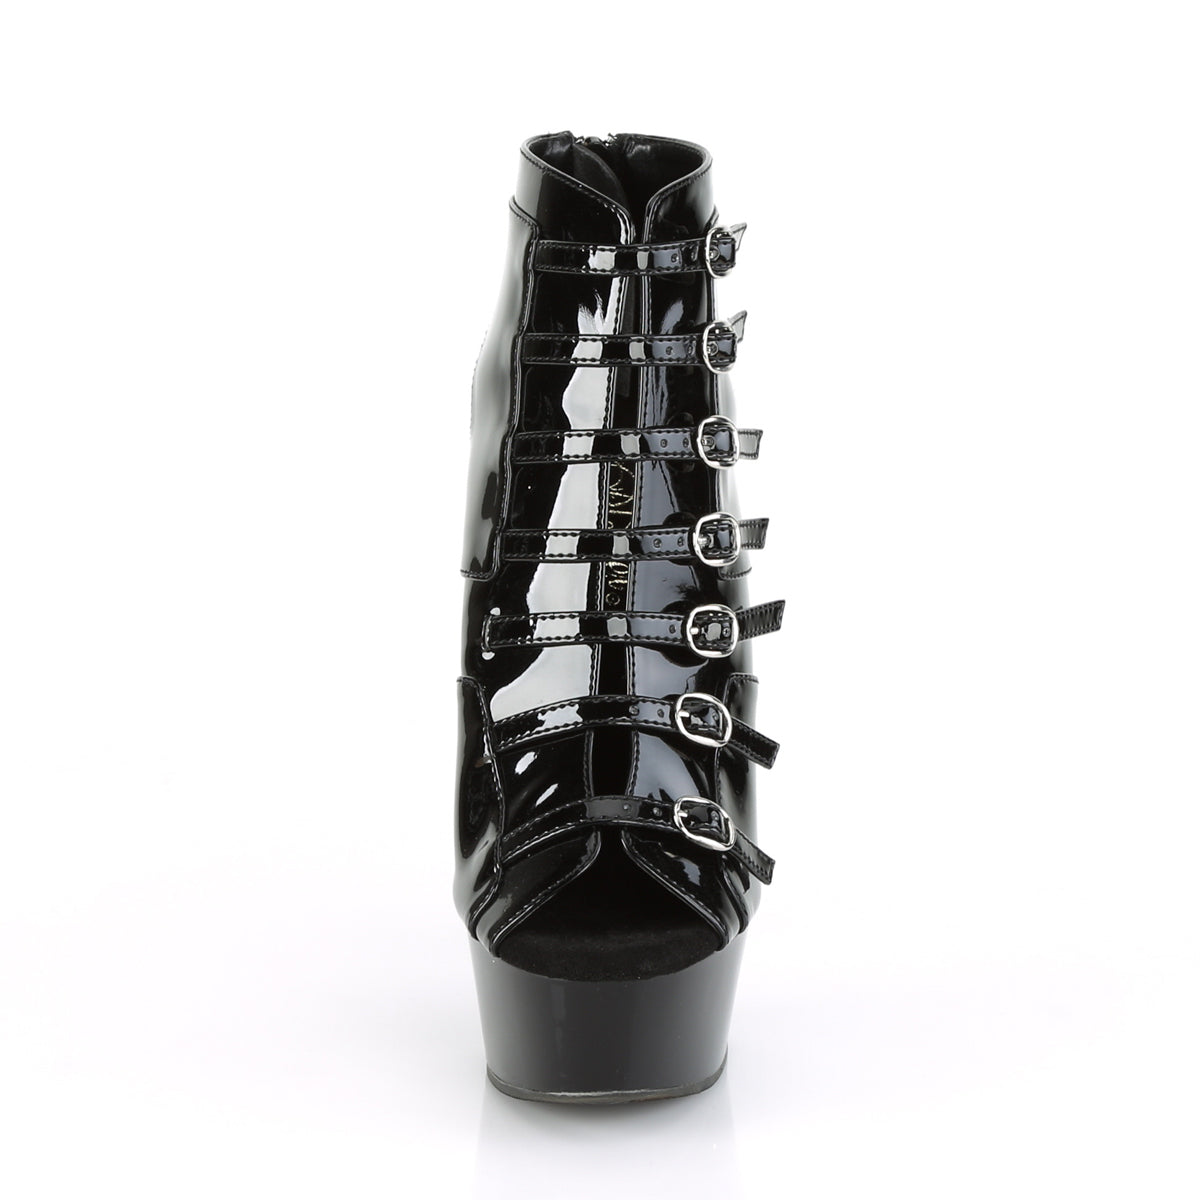 DELIGHT-600-11 Black Ankle Peep Toe Boots